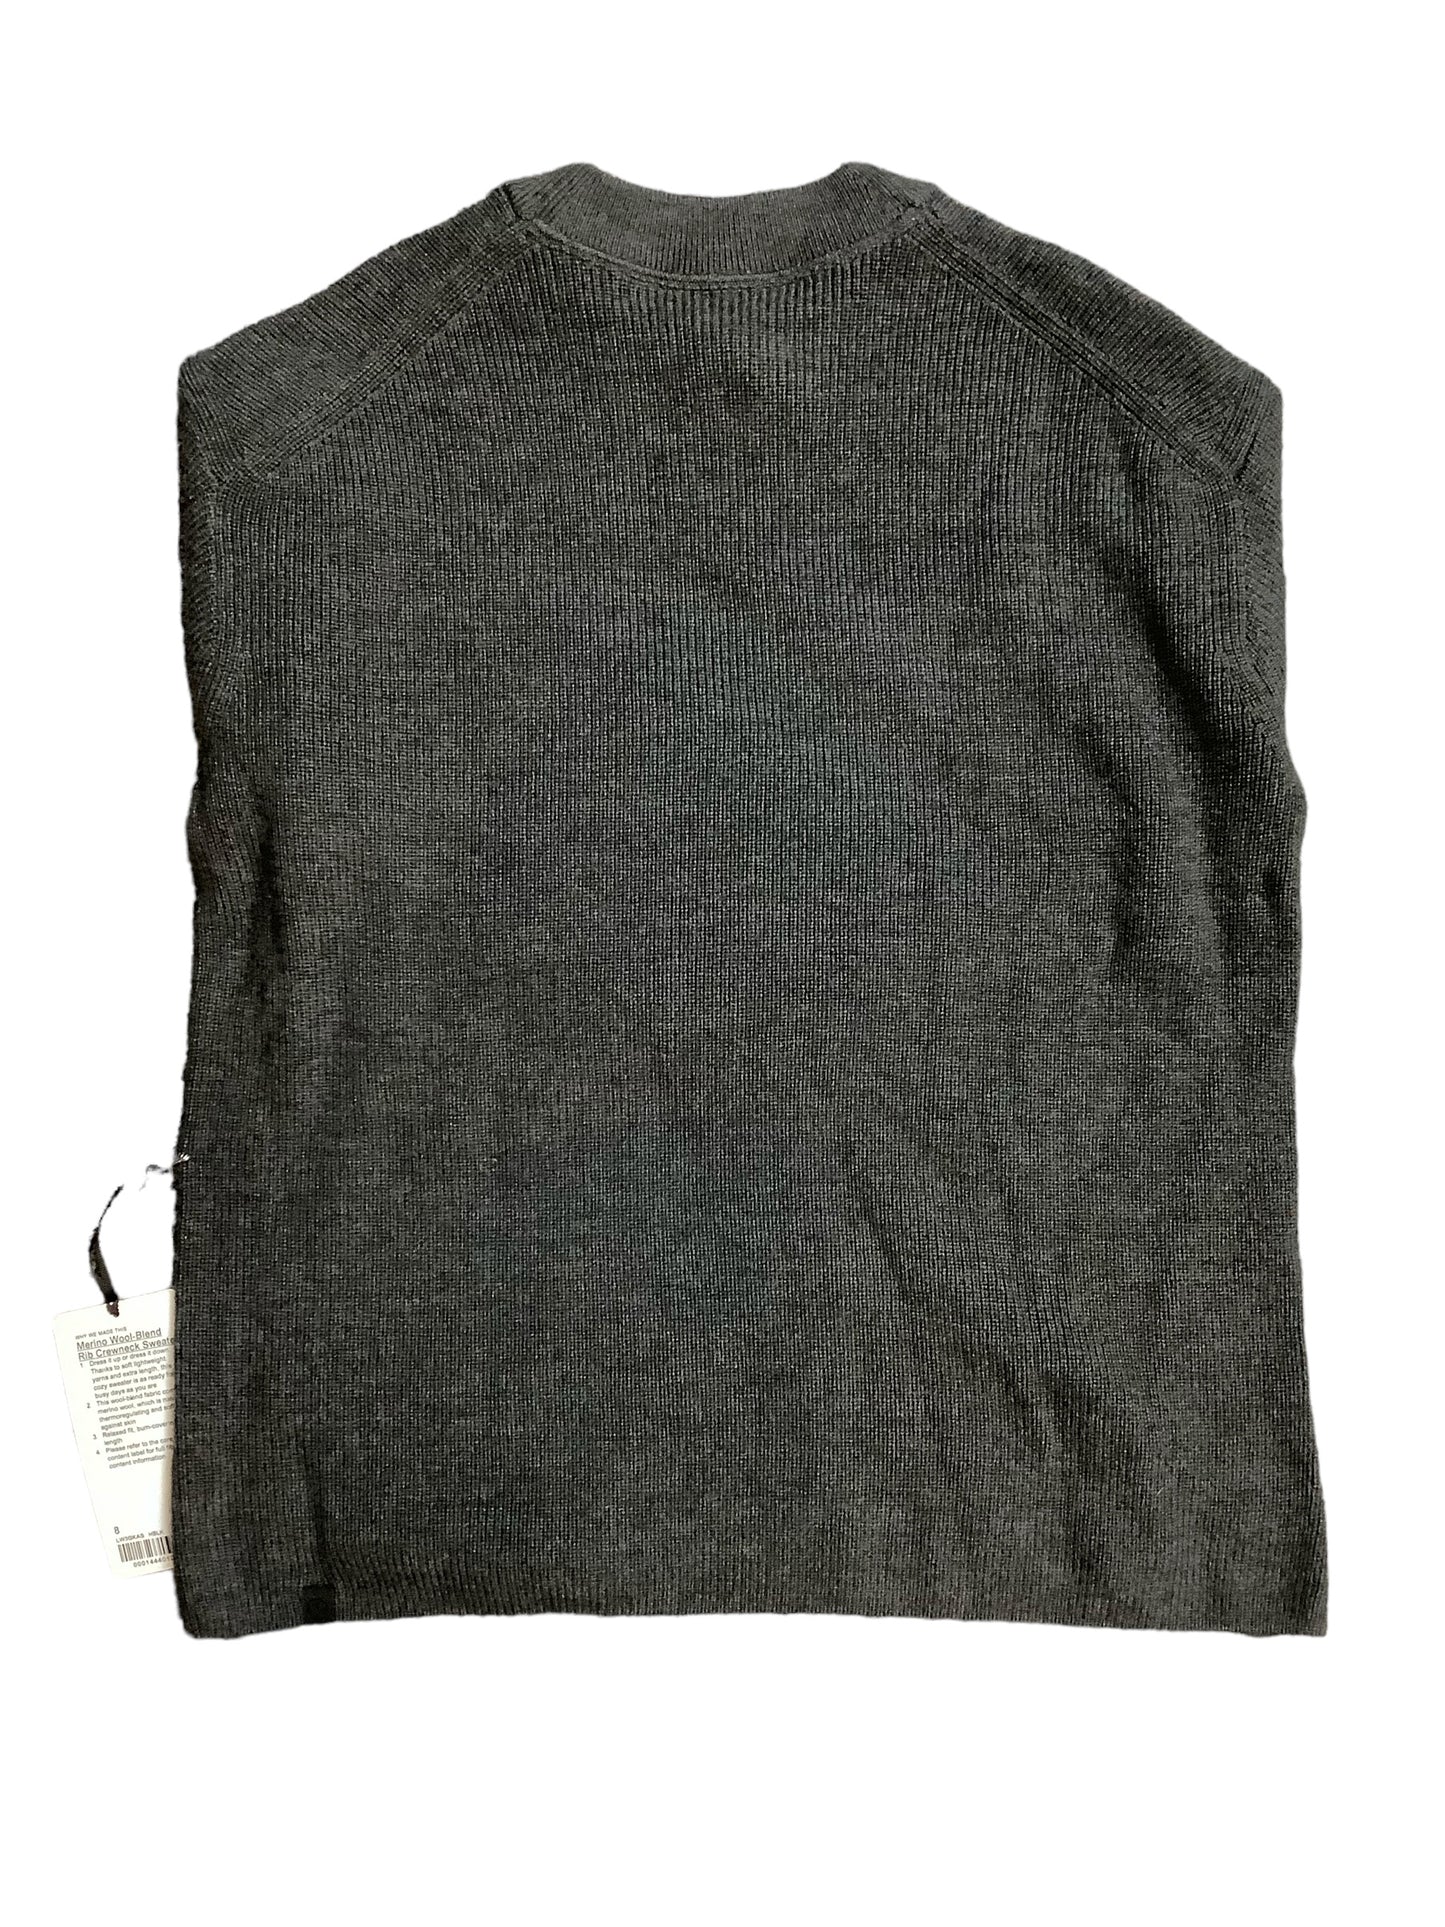 Sweater By Lululemon  Size: 8